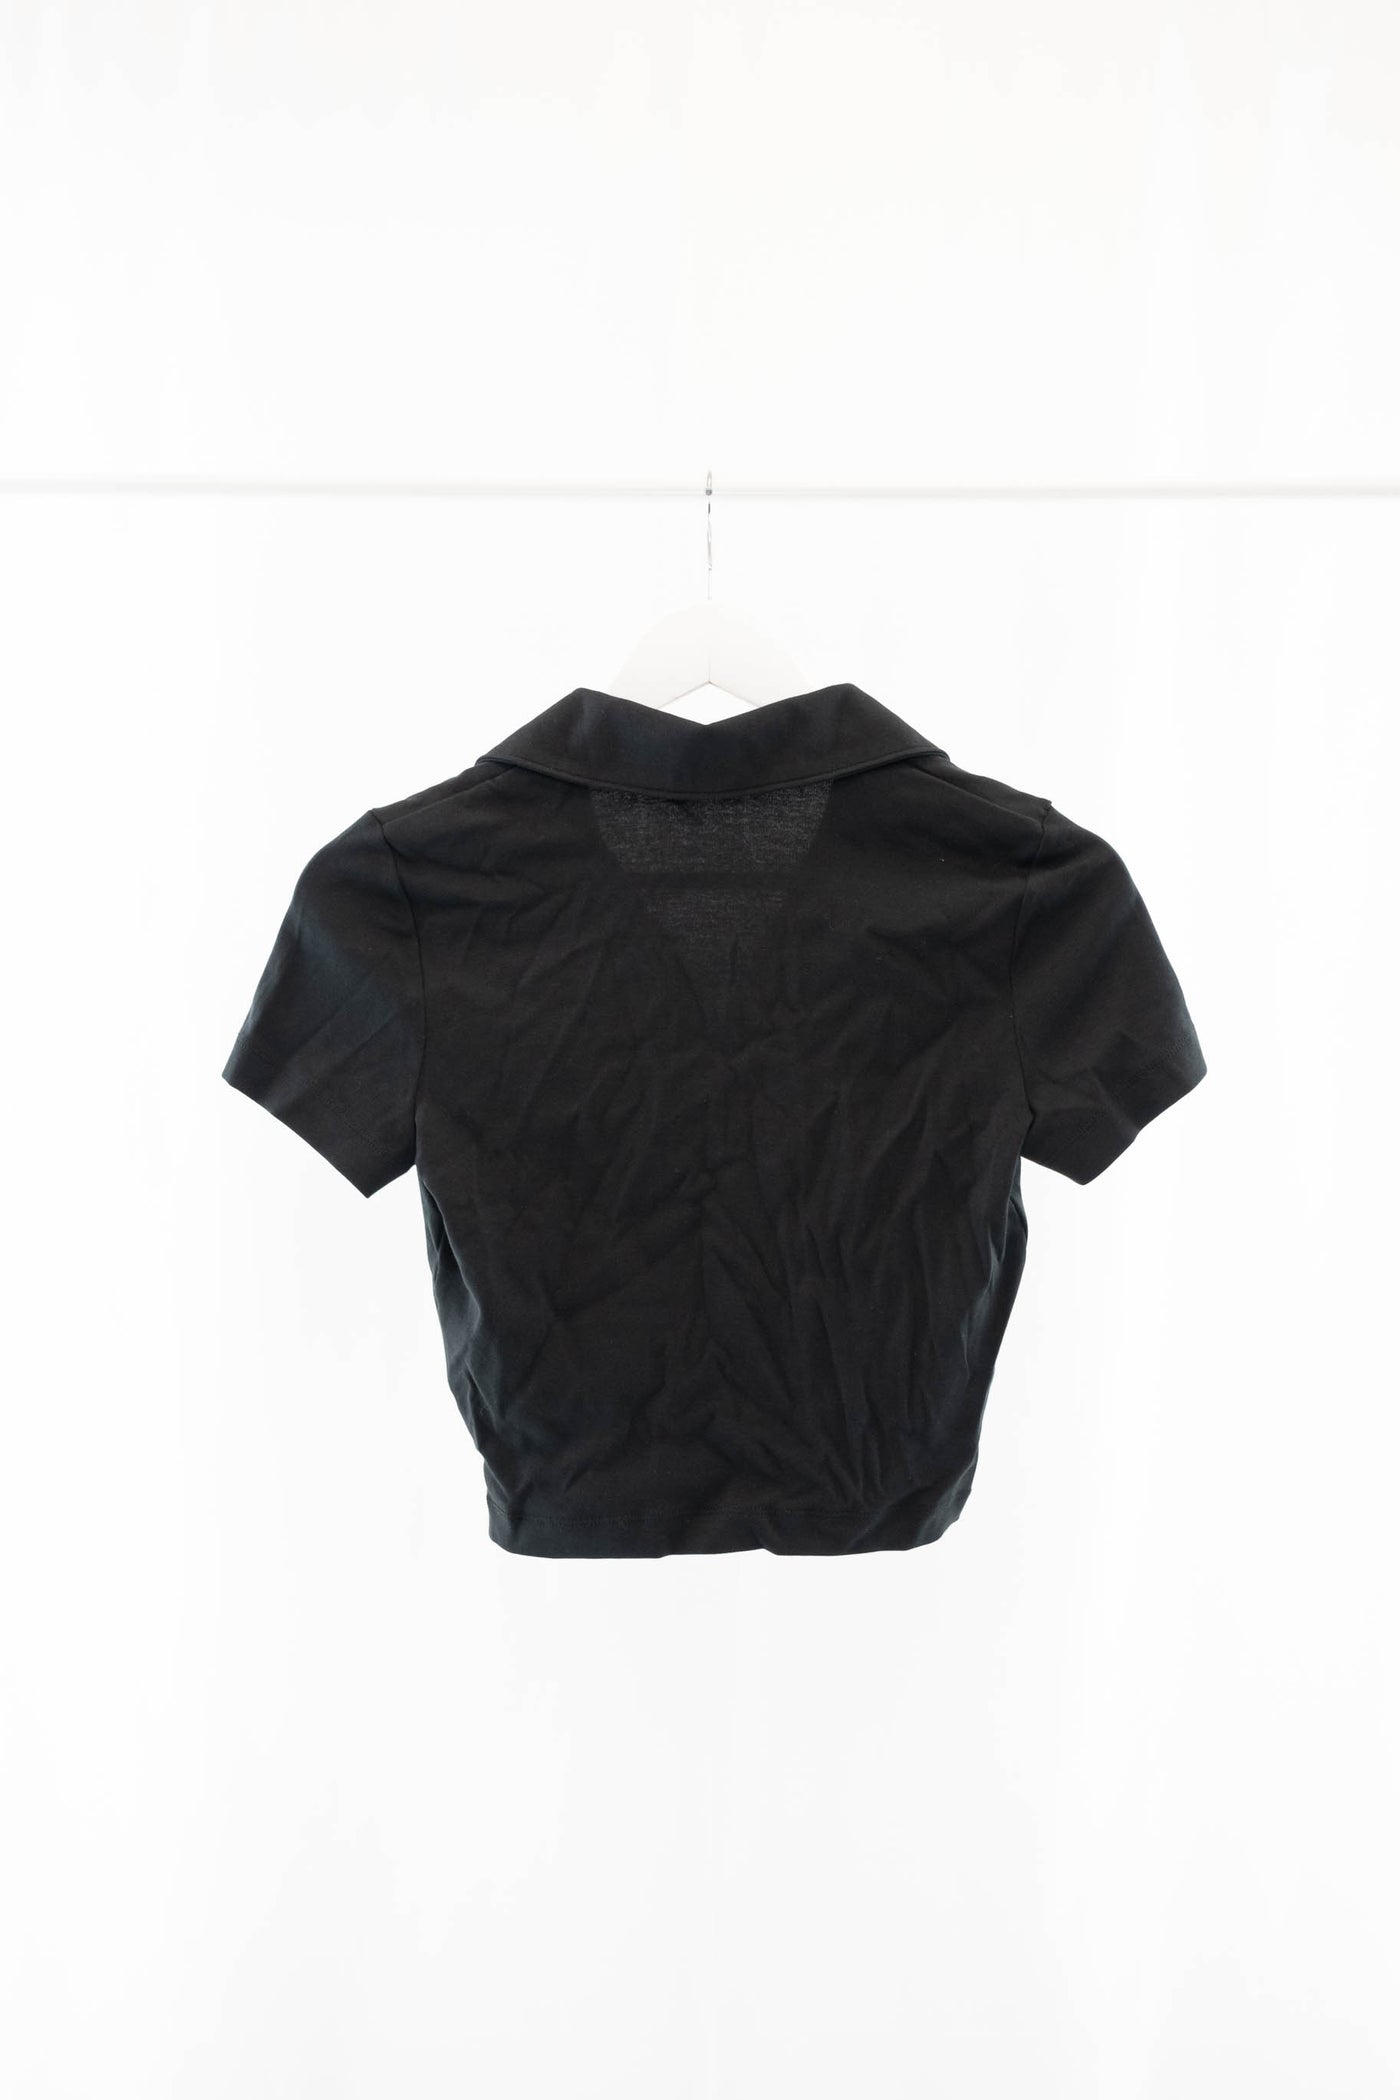 Camiseta negra (NUEVO)